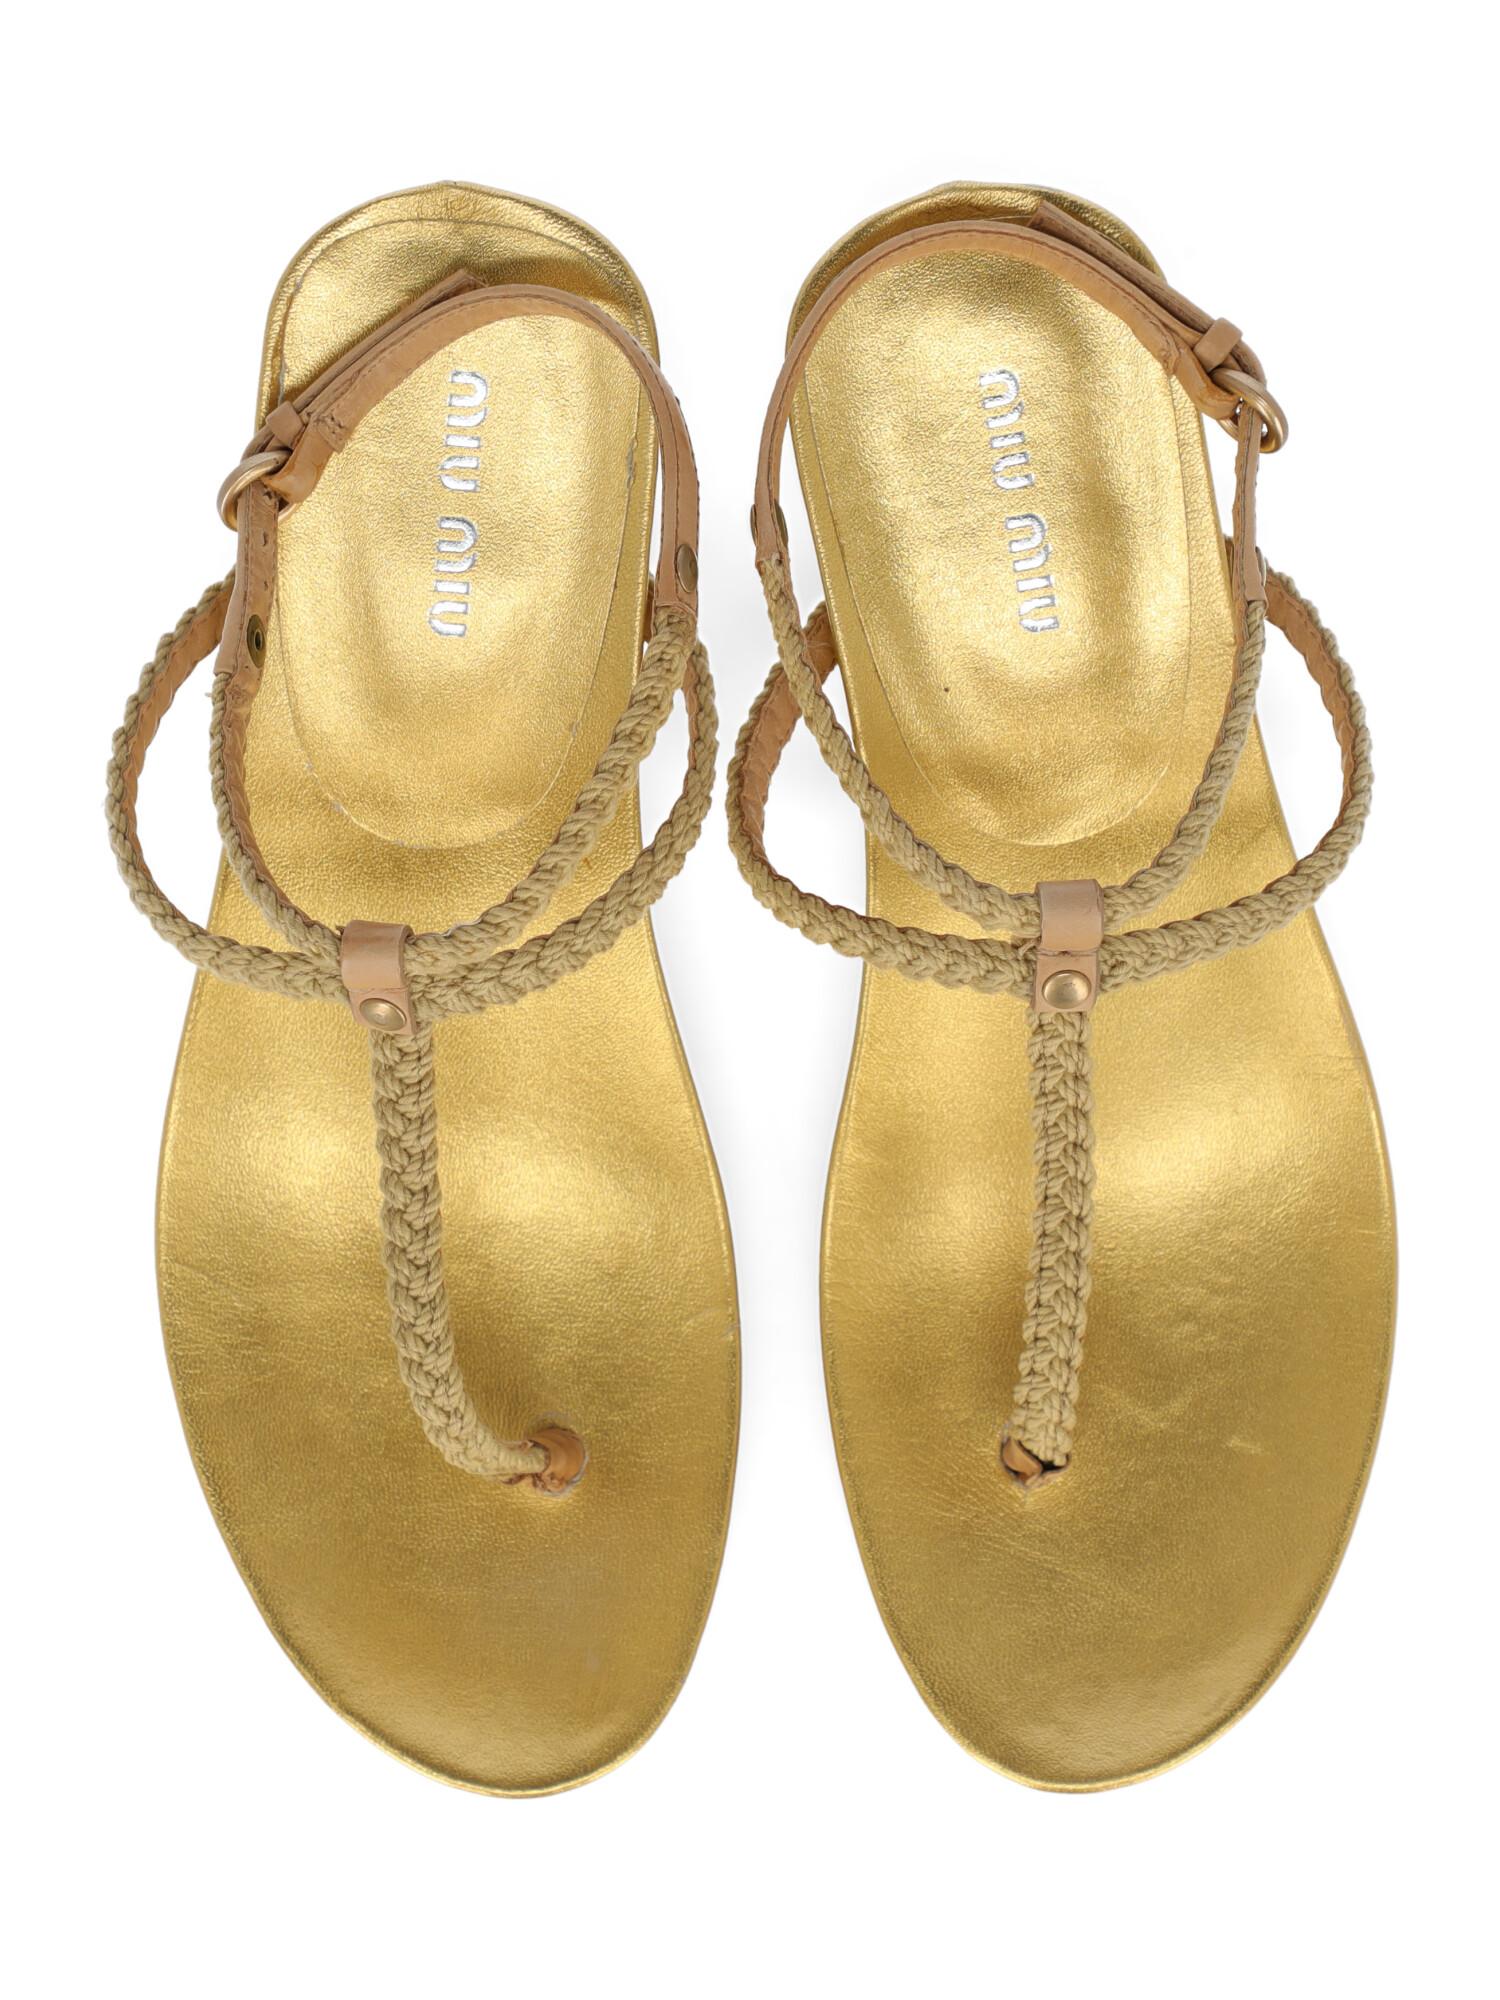 Miu Miu Woman Sandals Gold Leather IT 36.5 For Sale 1